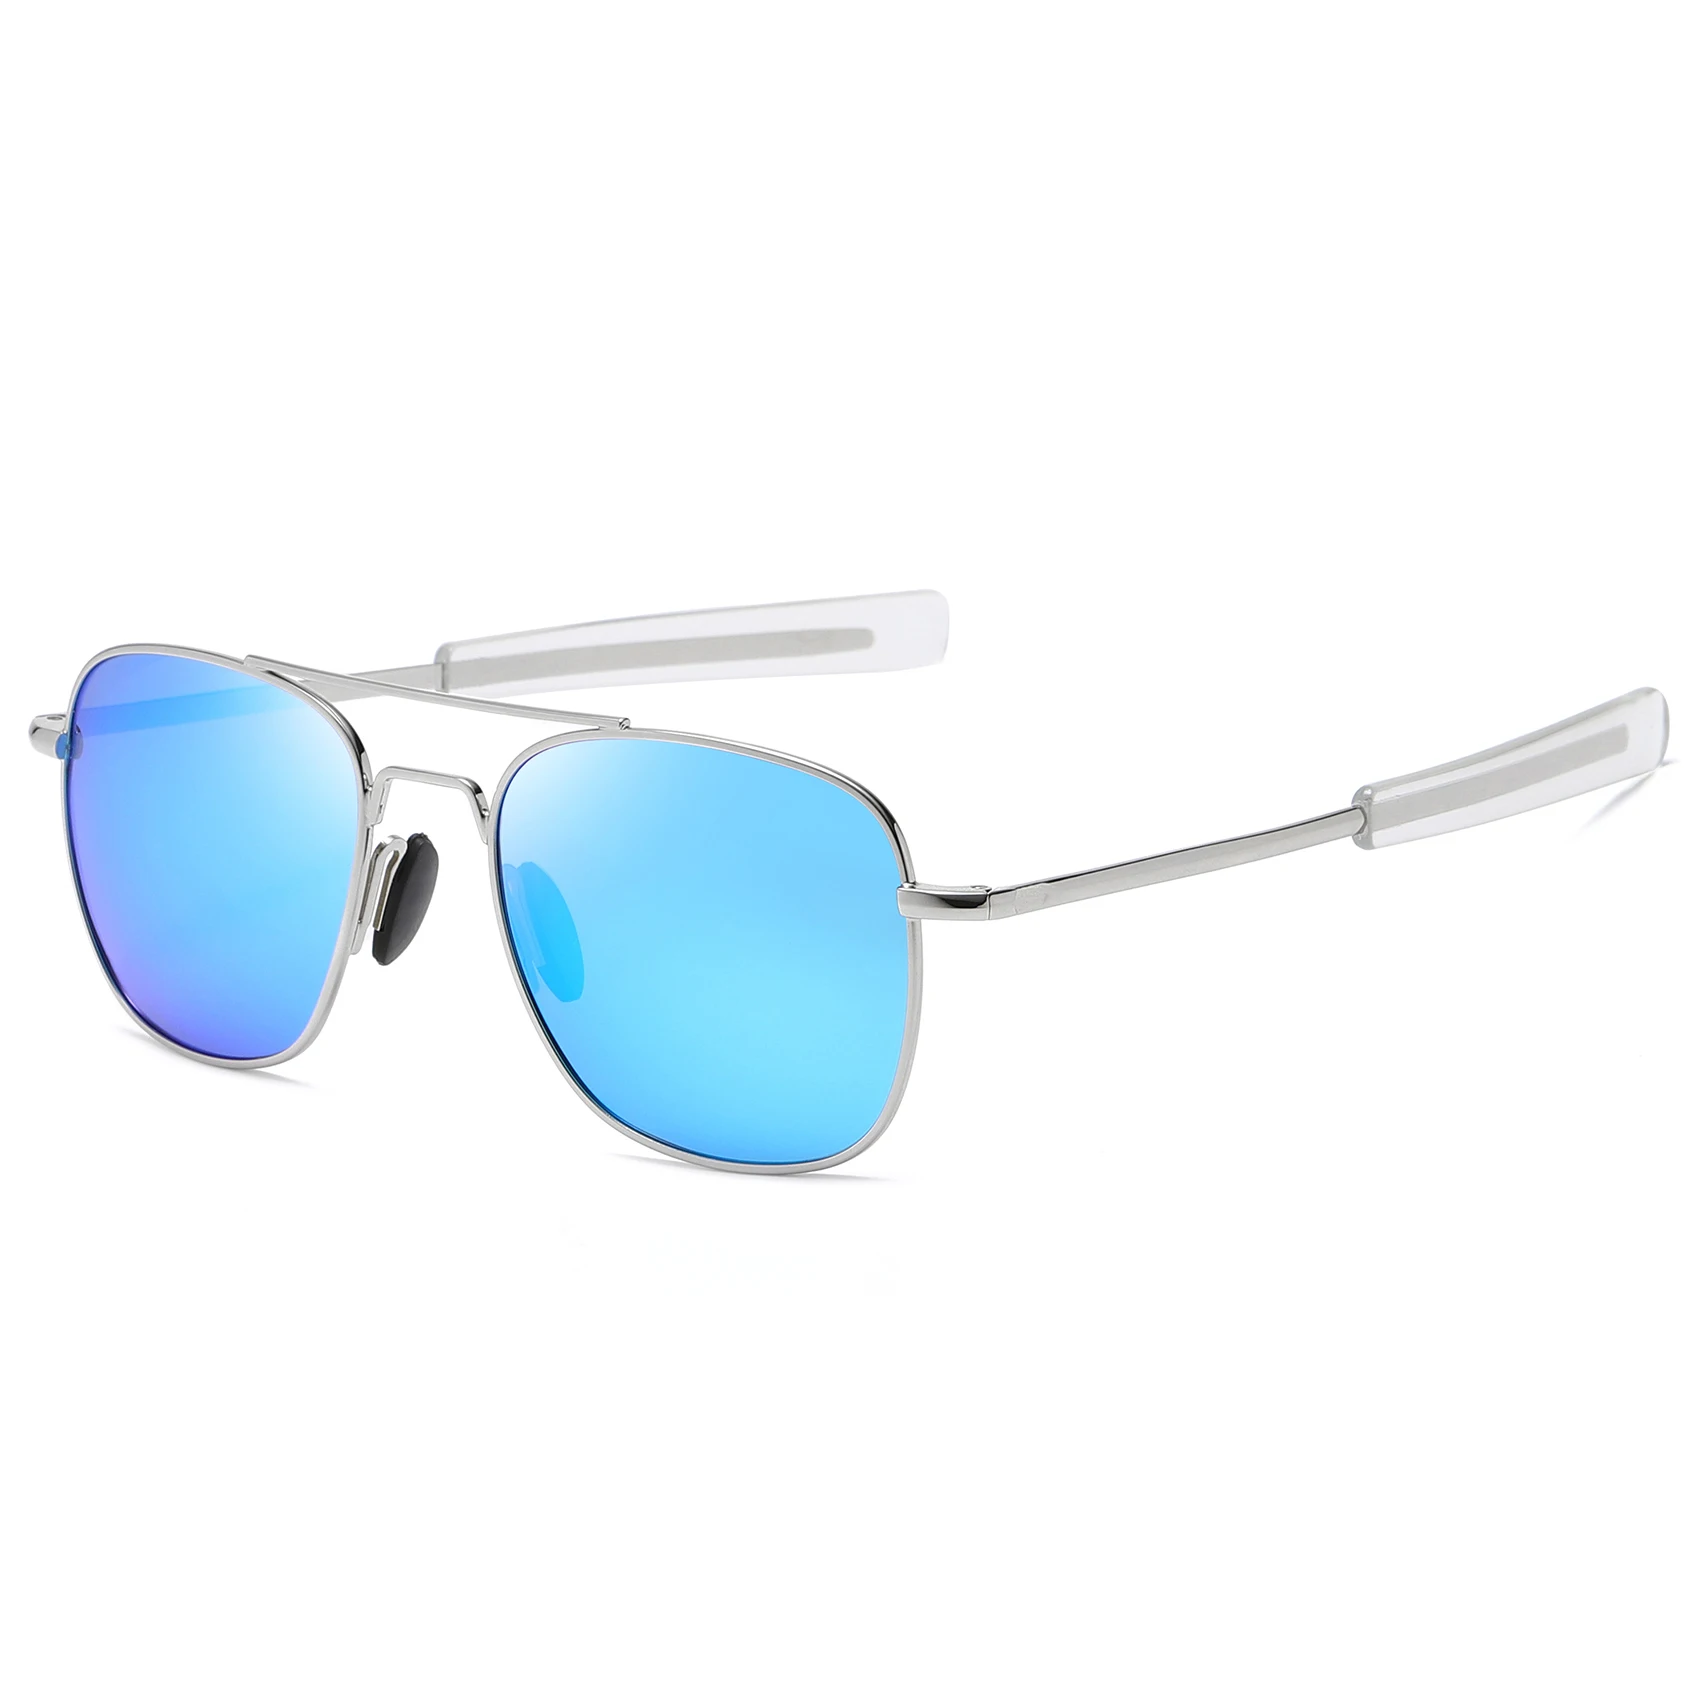 

2022 New Mens Pilot Military Sunglasses Driving Mirrored Night Vision Glasses Eyewear Brand Designer Polarized Sunglasses Blue